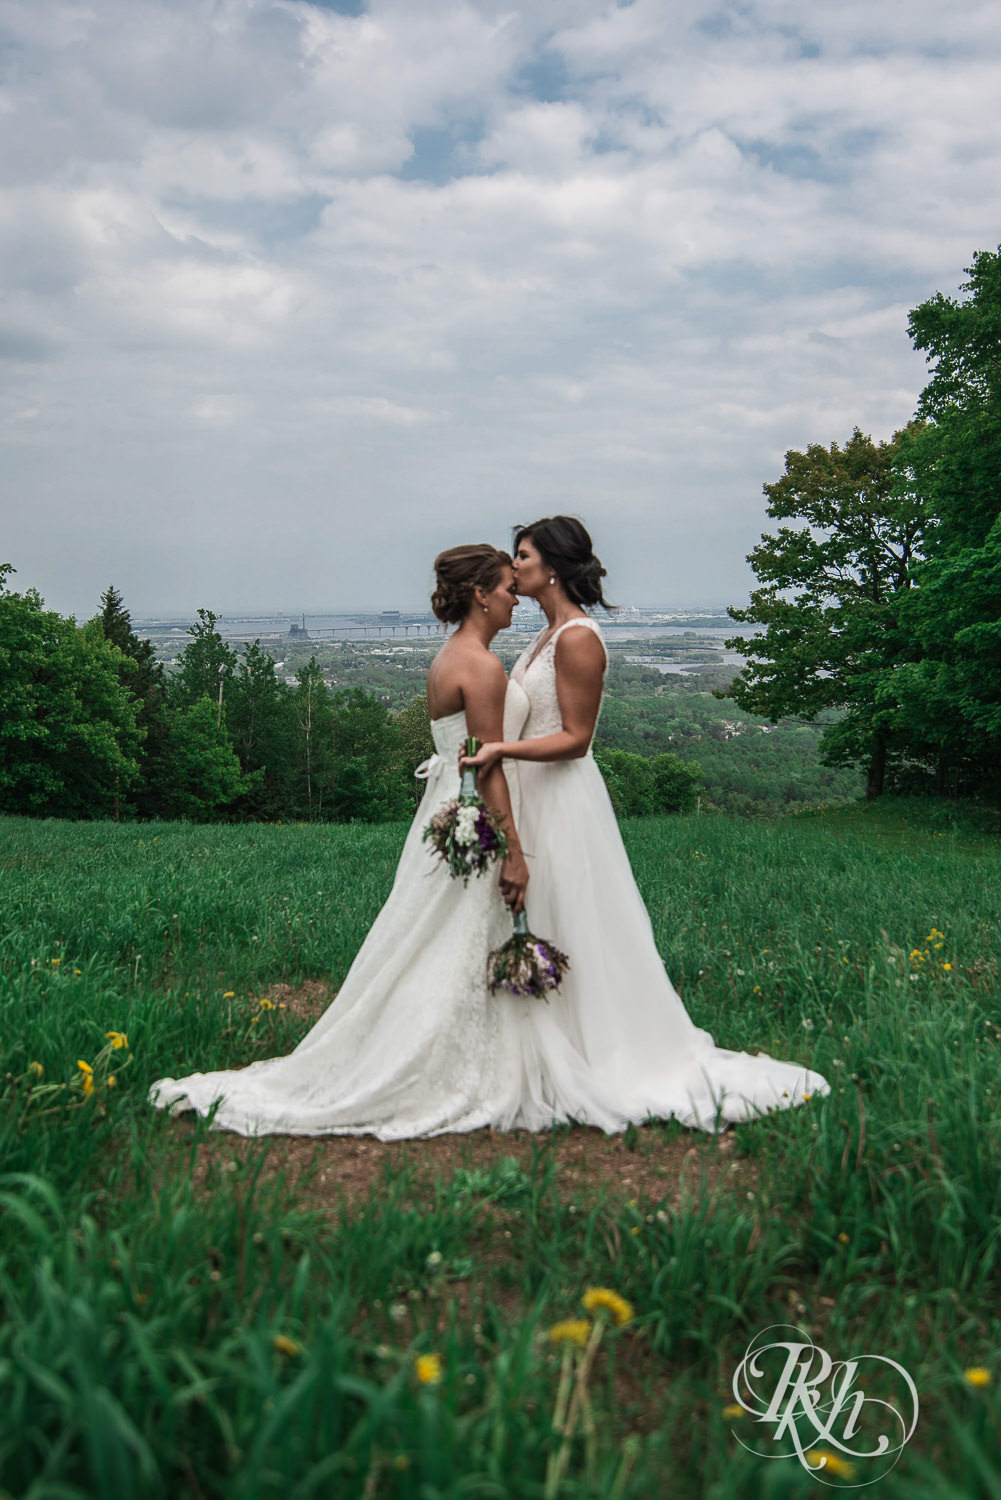 Lesbian brides kiss outside at Spirit Mountain in Duluth, Minnesota.